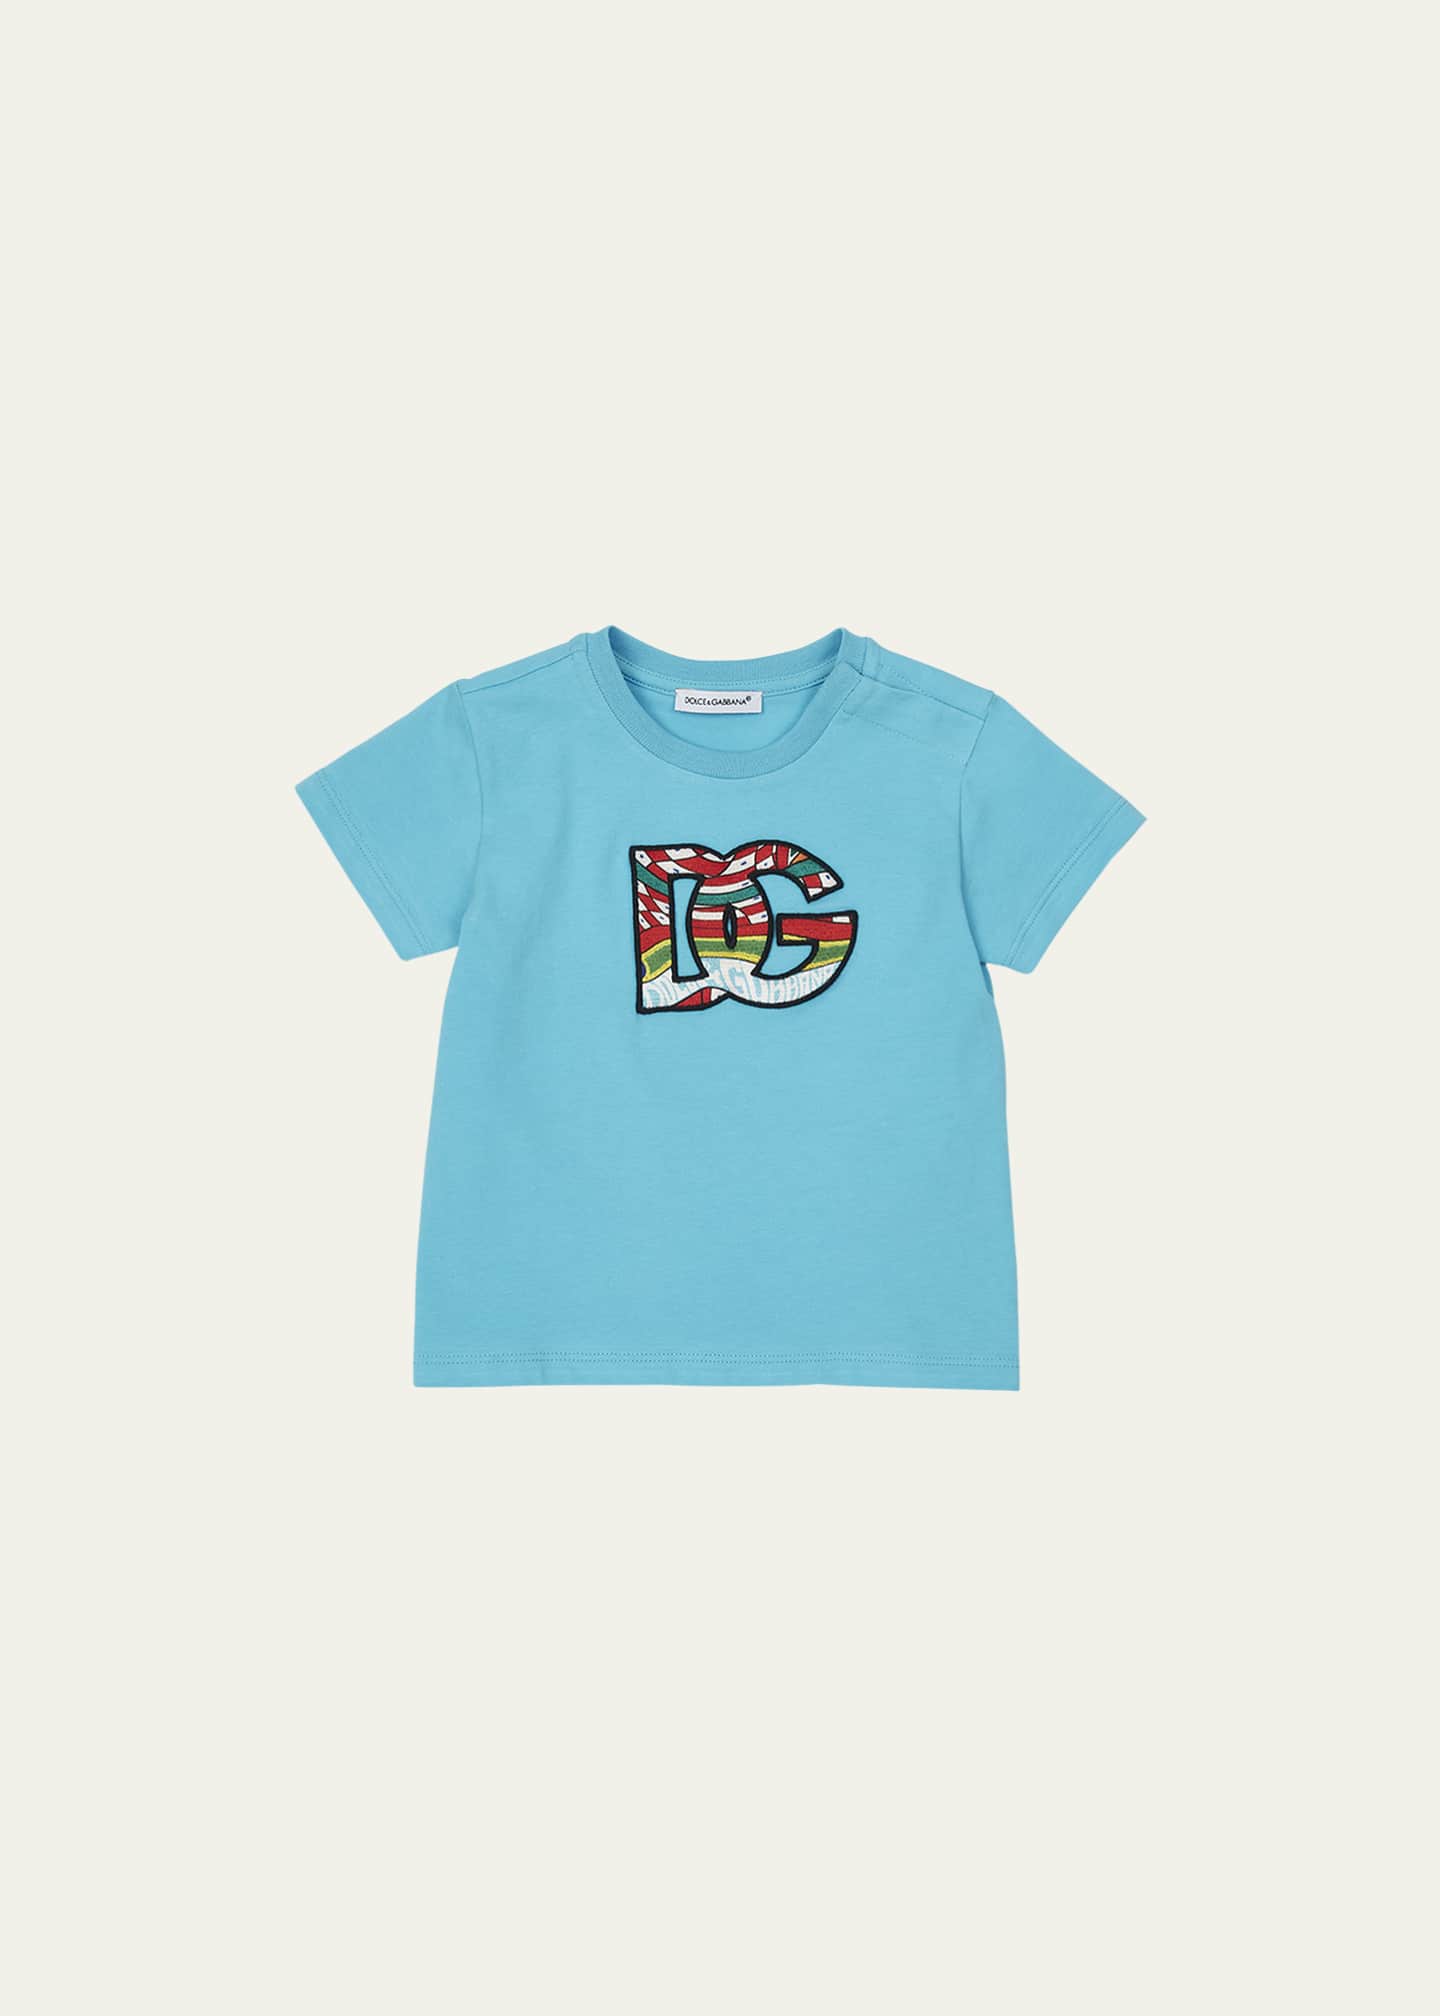 Dolce&Gabbana Kid's Carretto Embroidered Interlocked Logo T-Shirt